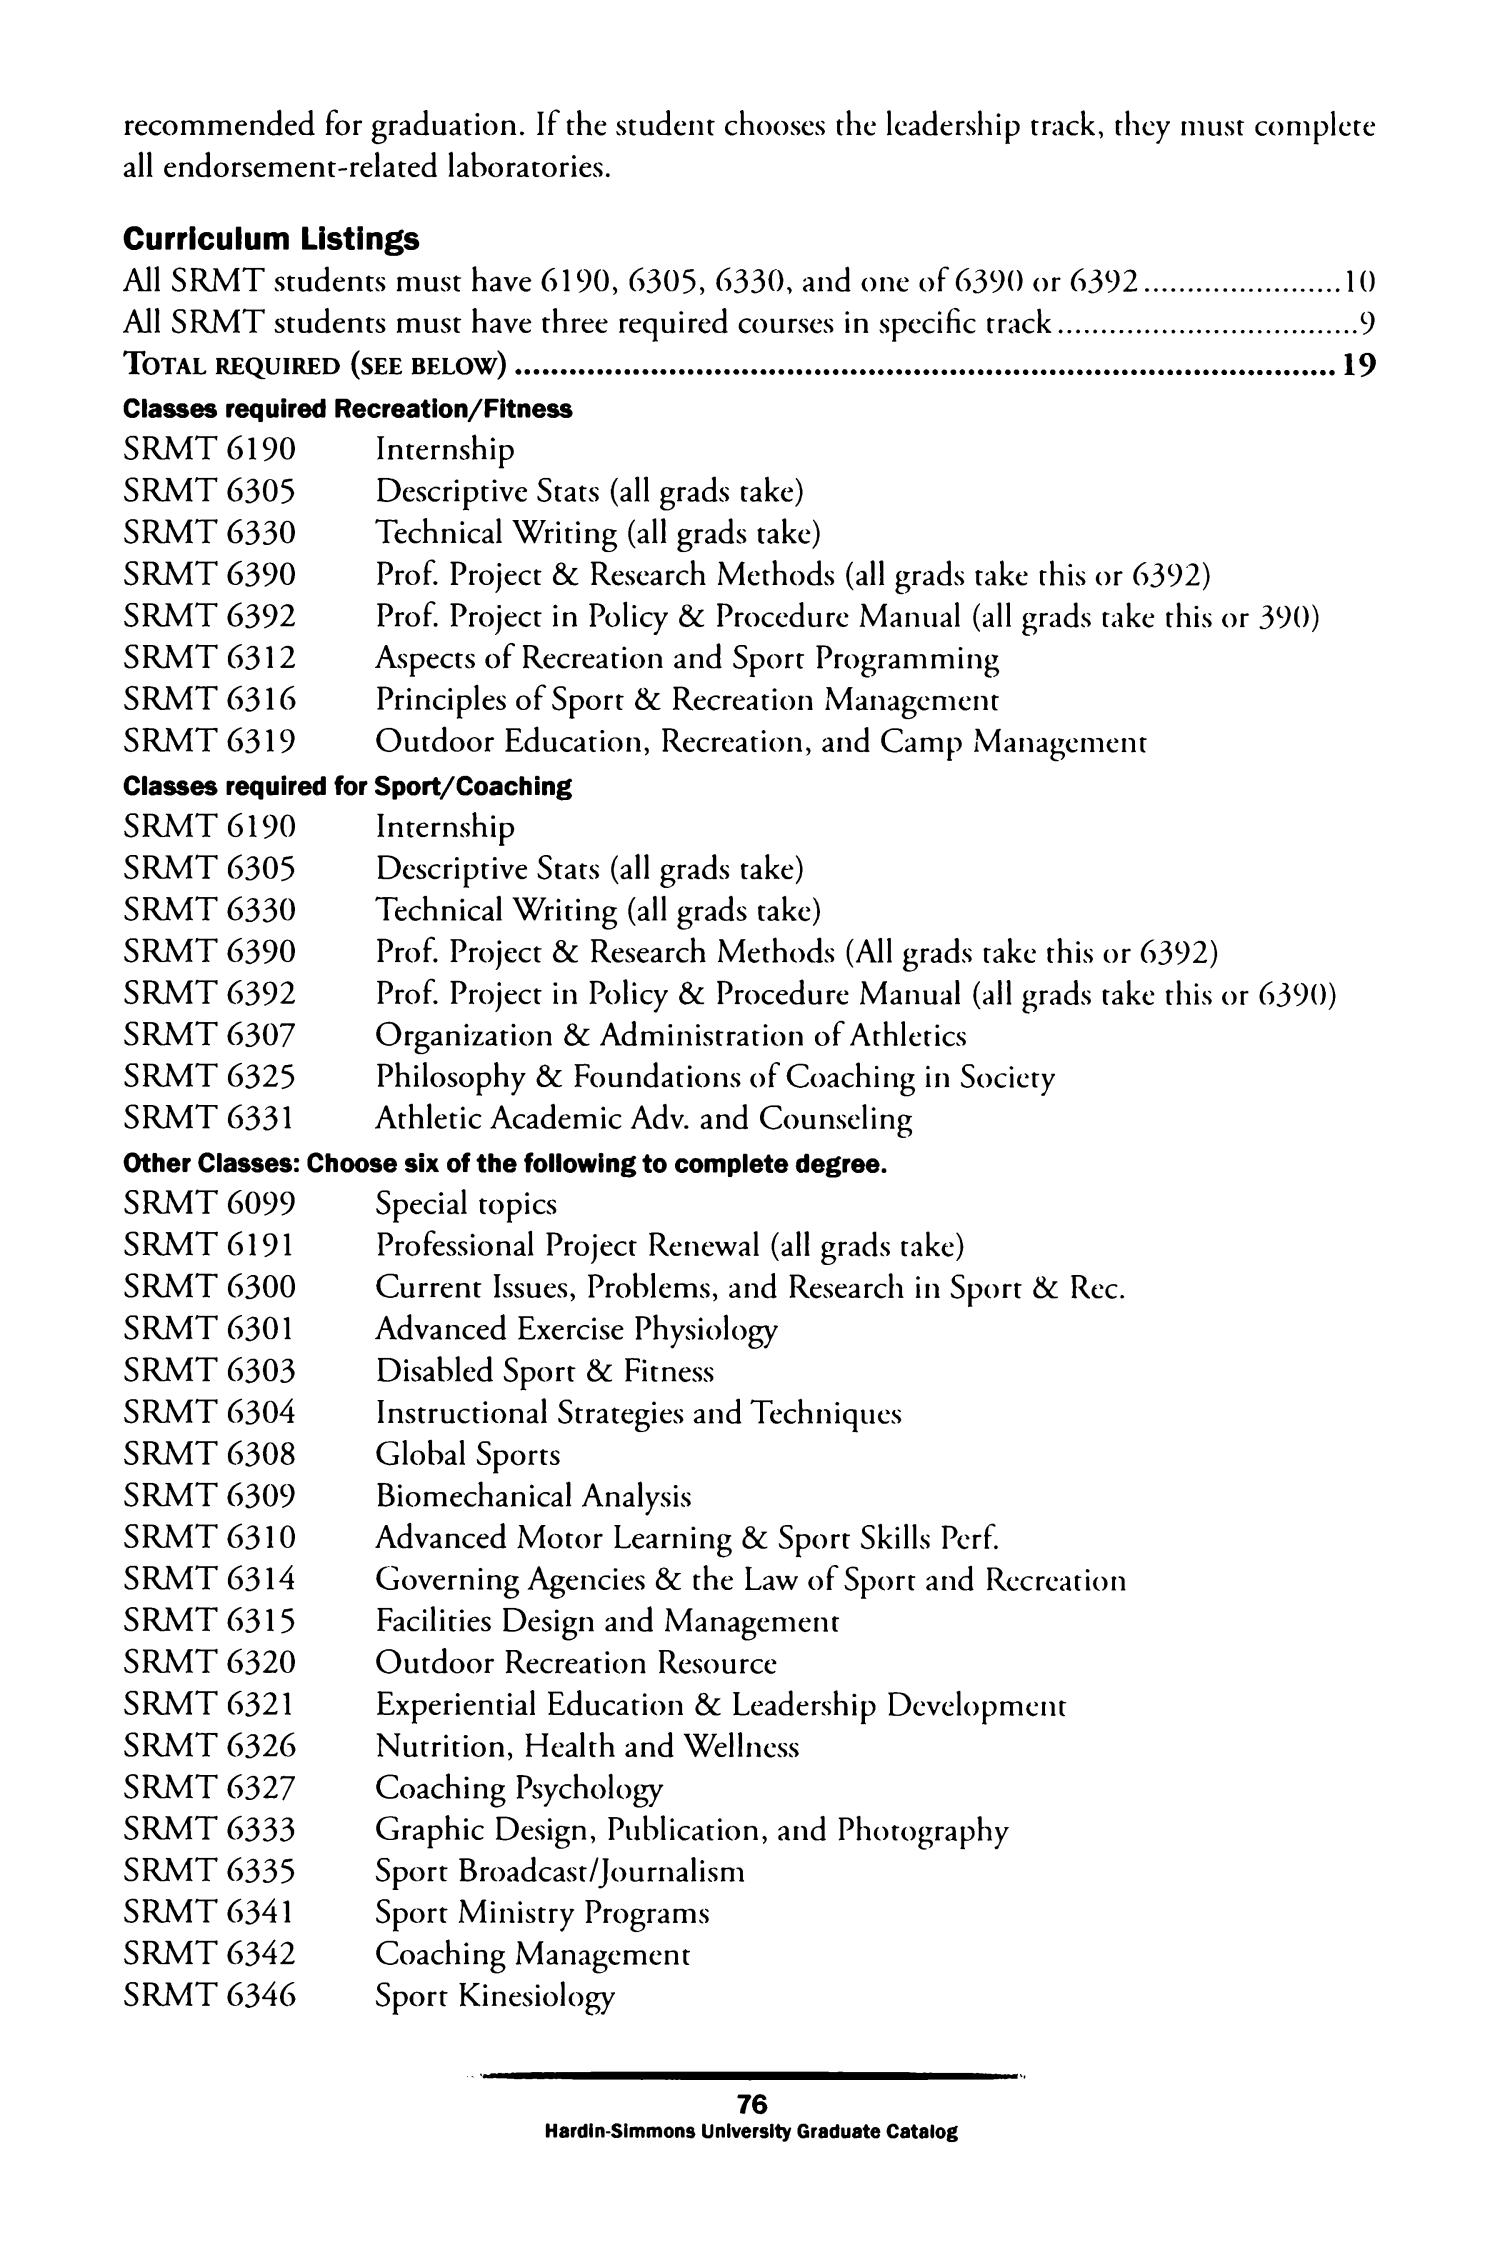 Catalog of Hardin-Simmons University, 2008-2009 Graduate Bulletin
                                                
                                                    76
                                                